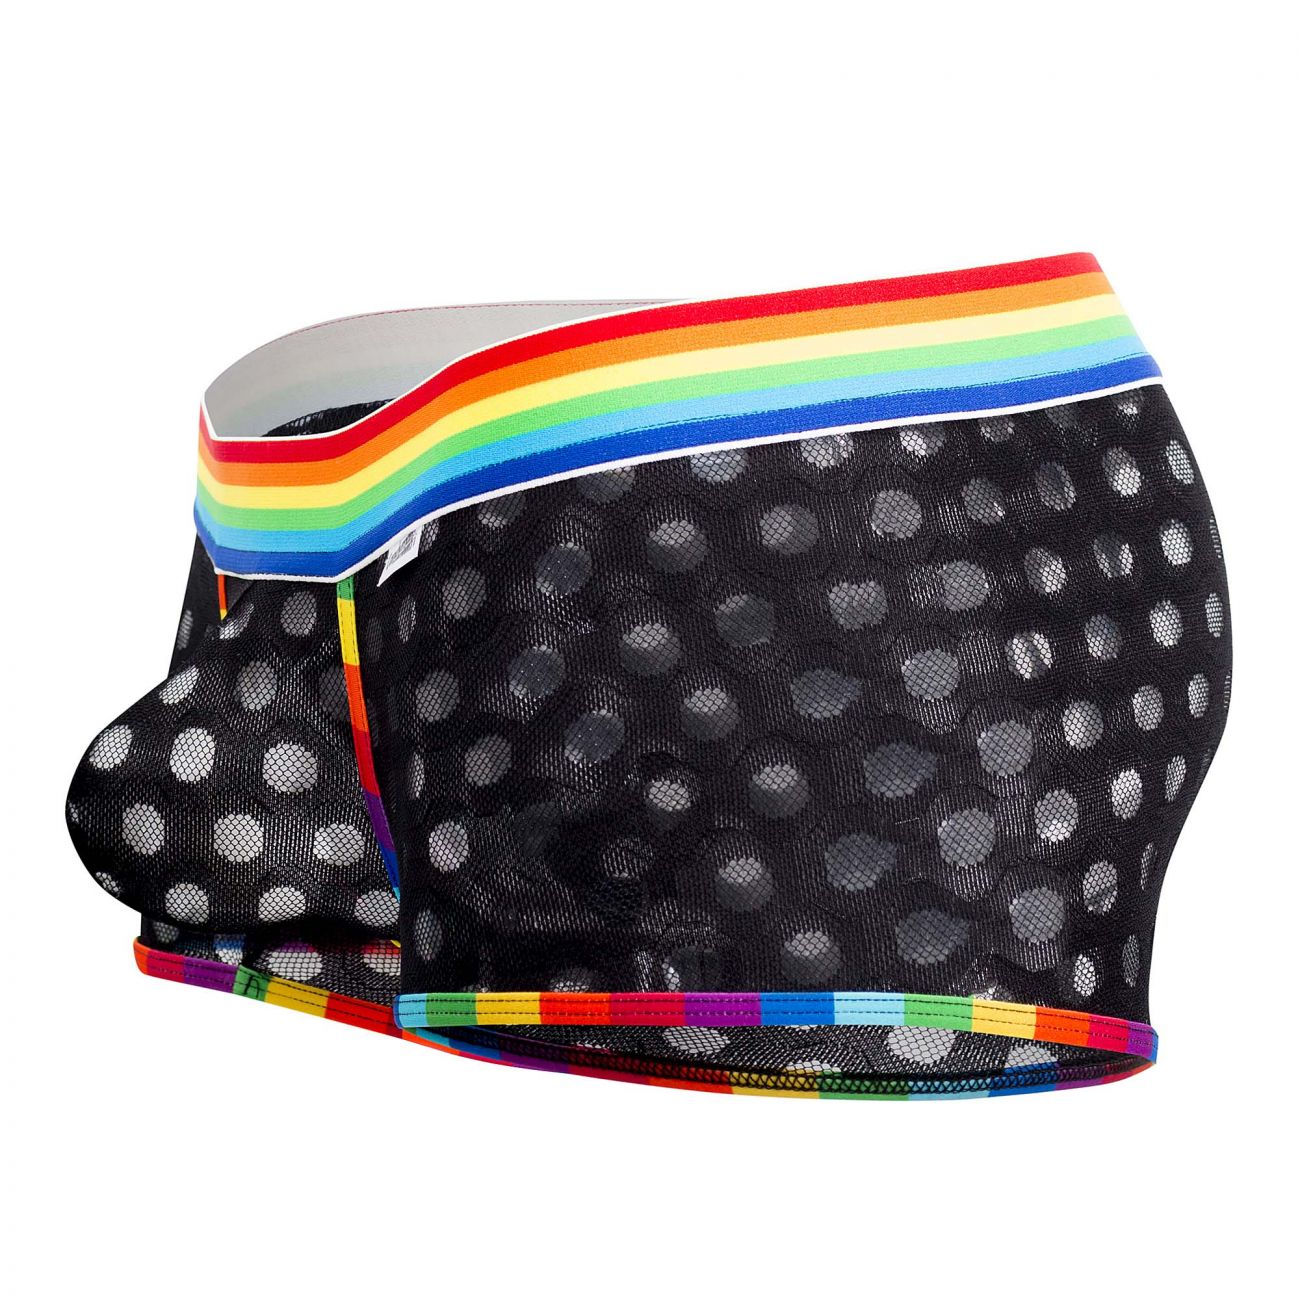 CandyMan 99511X Polka Mesh Trunks Black Rainbow Plus Sizes